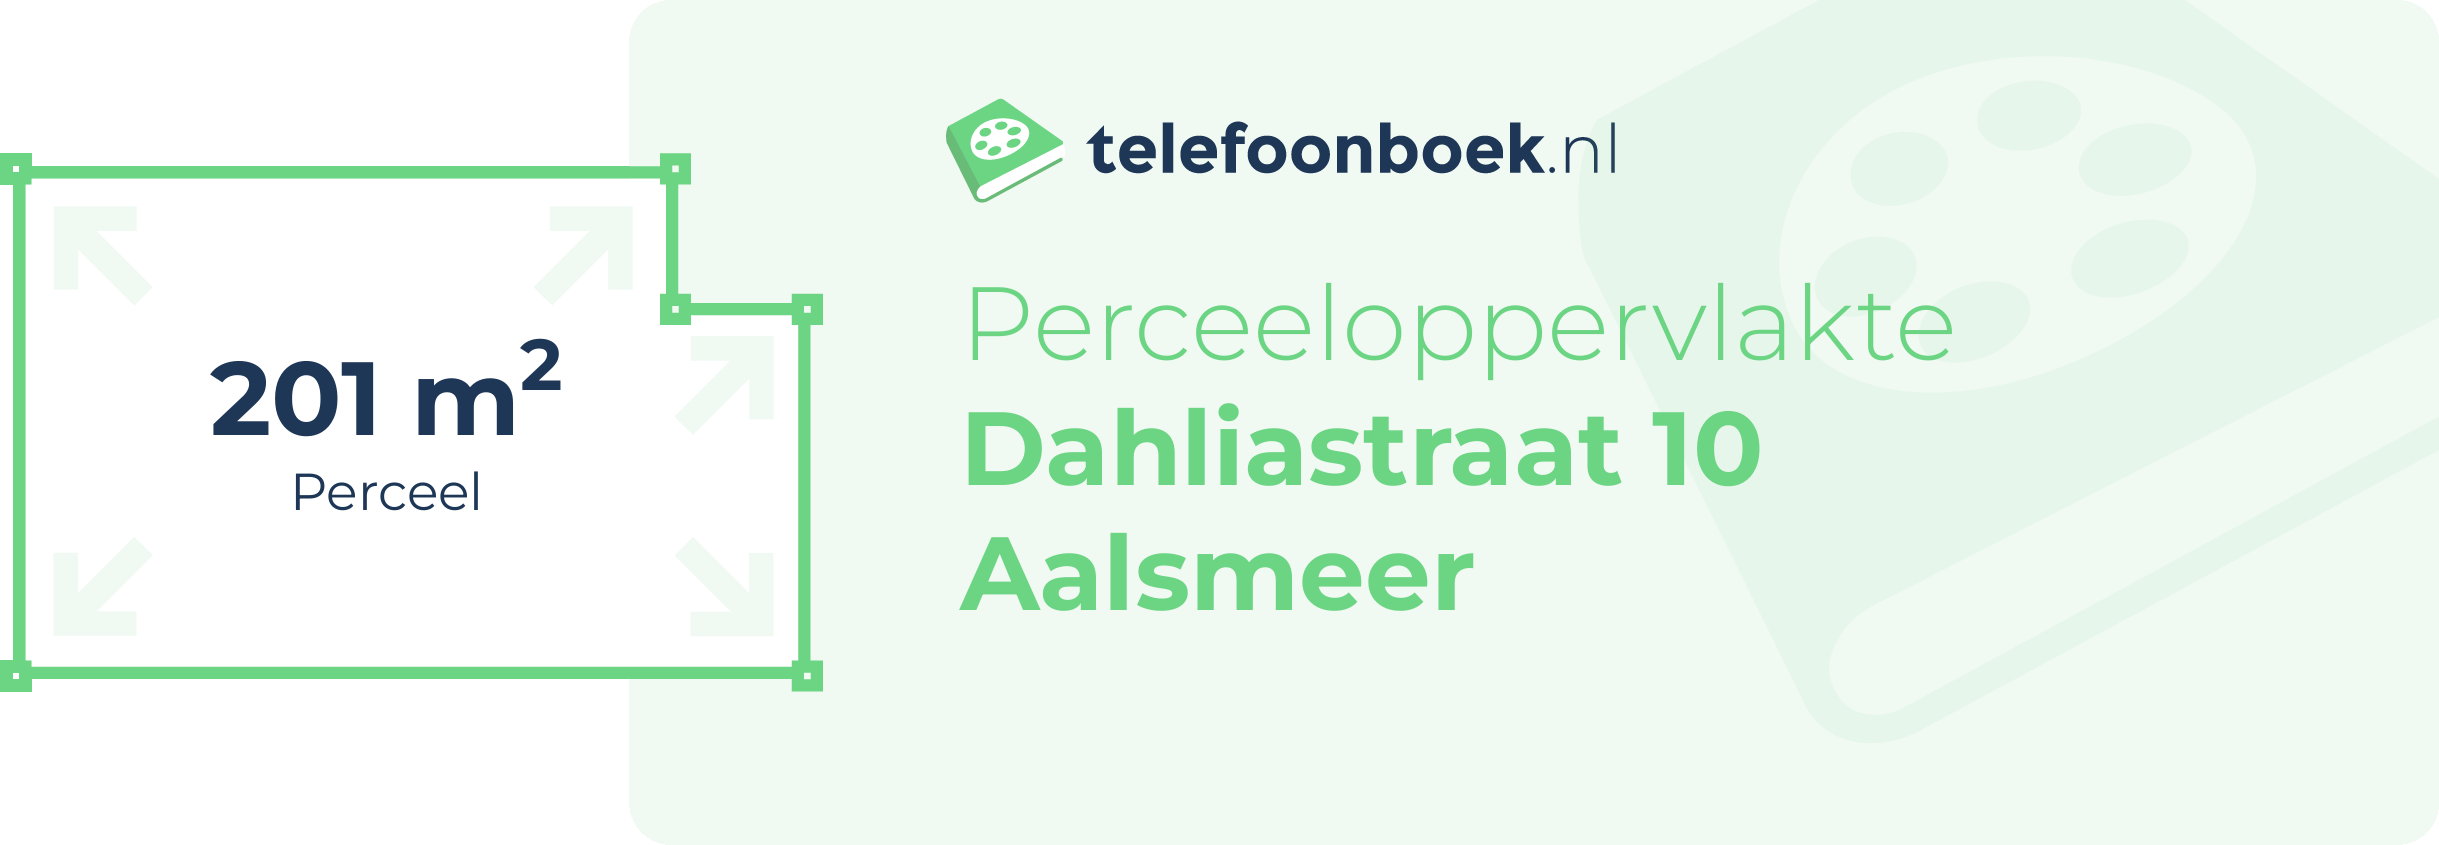 Perceeloppervlakte Dahliastraat 10 Aalsmeer